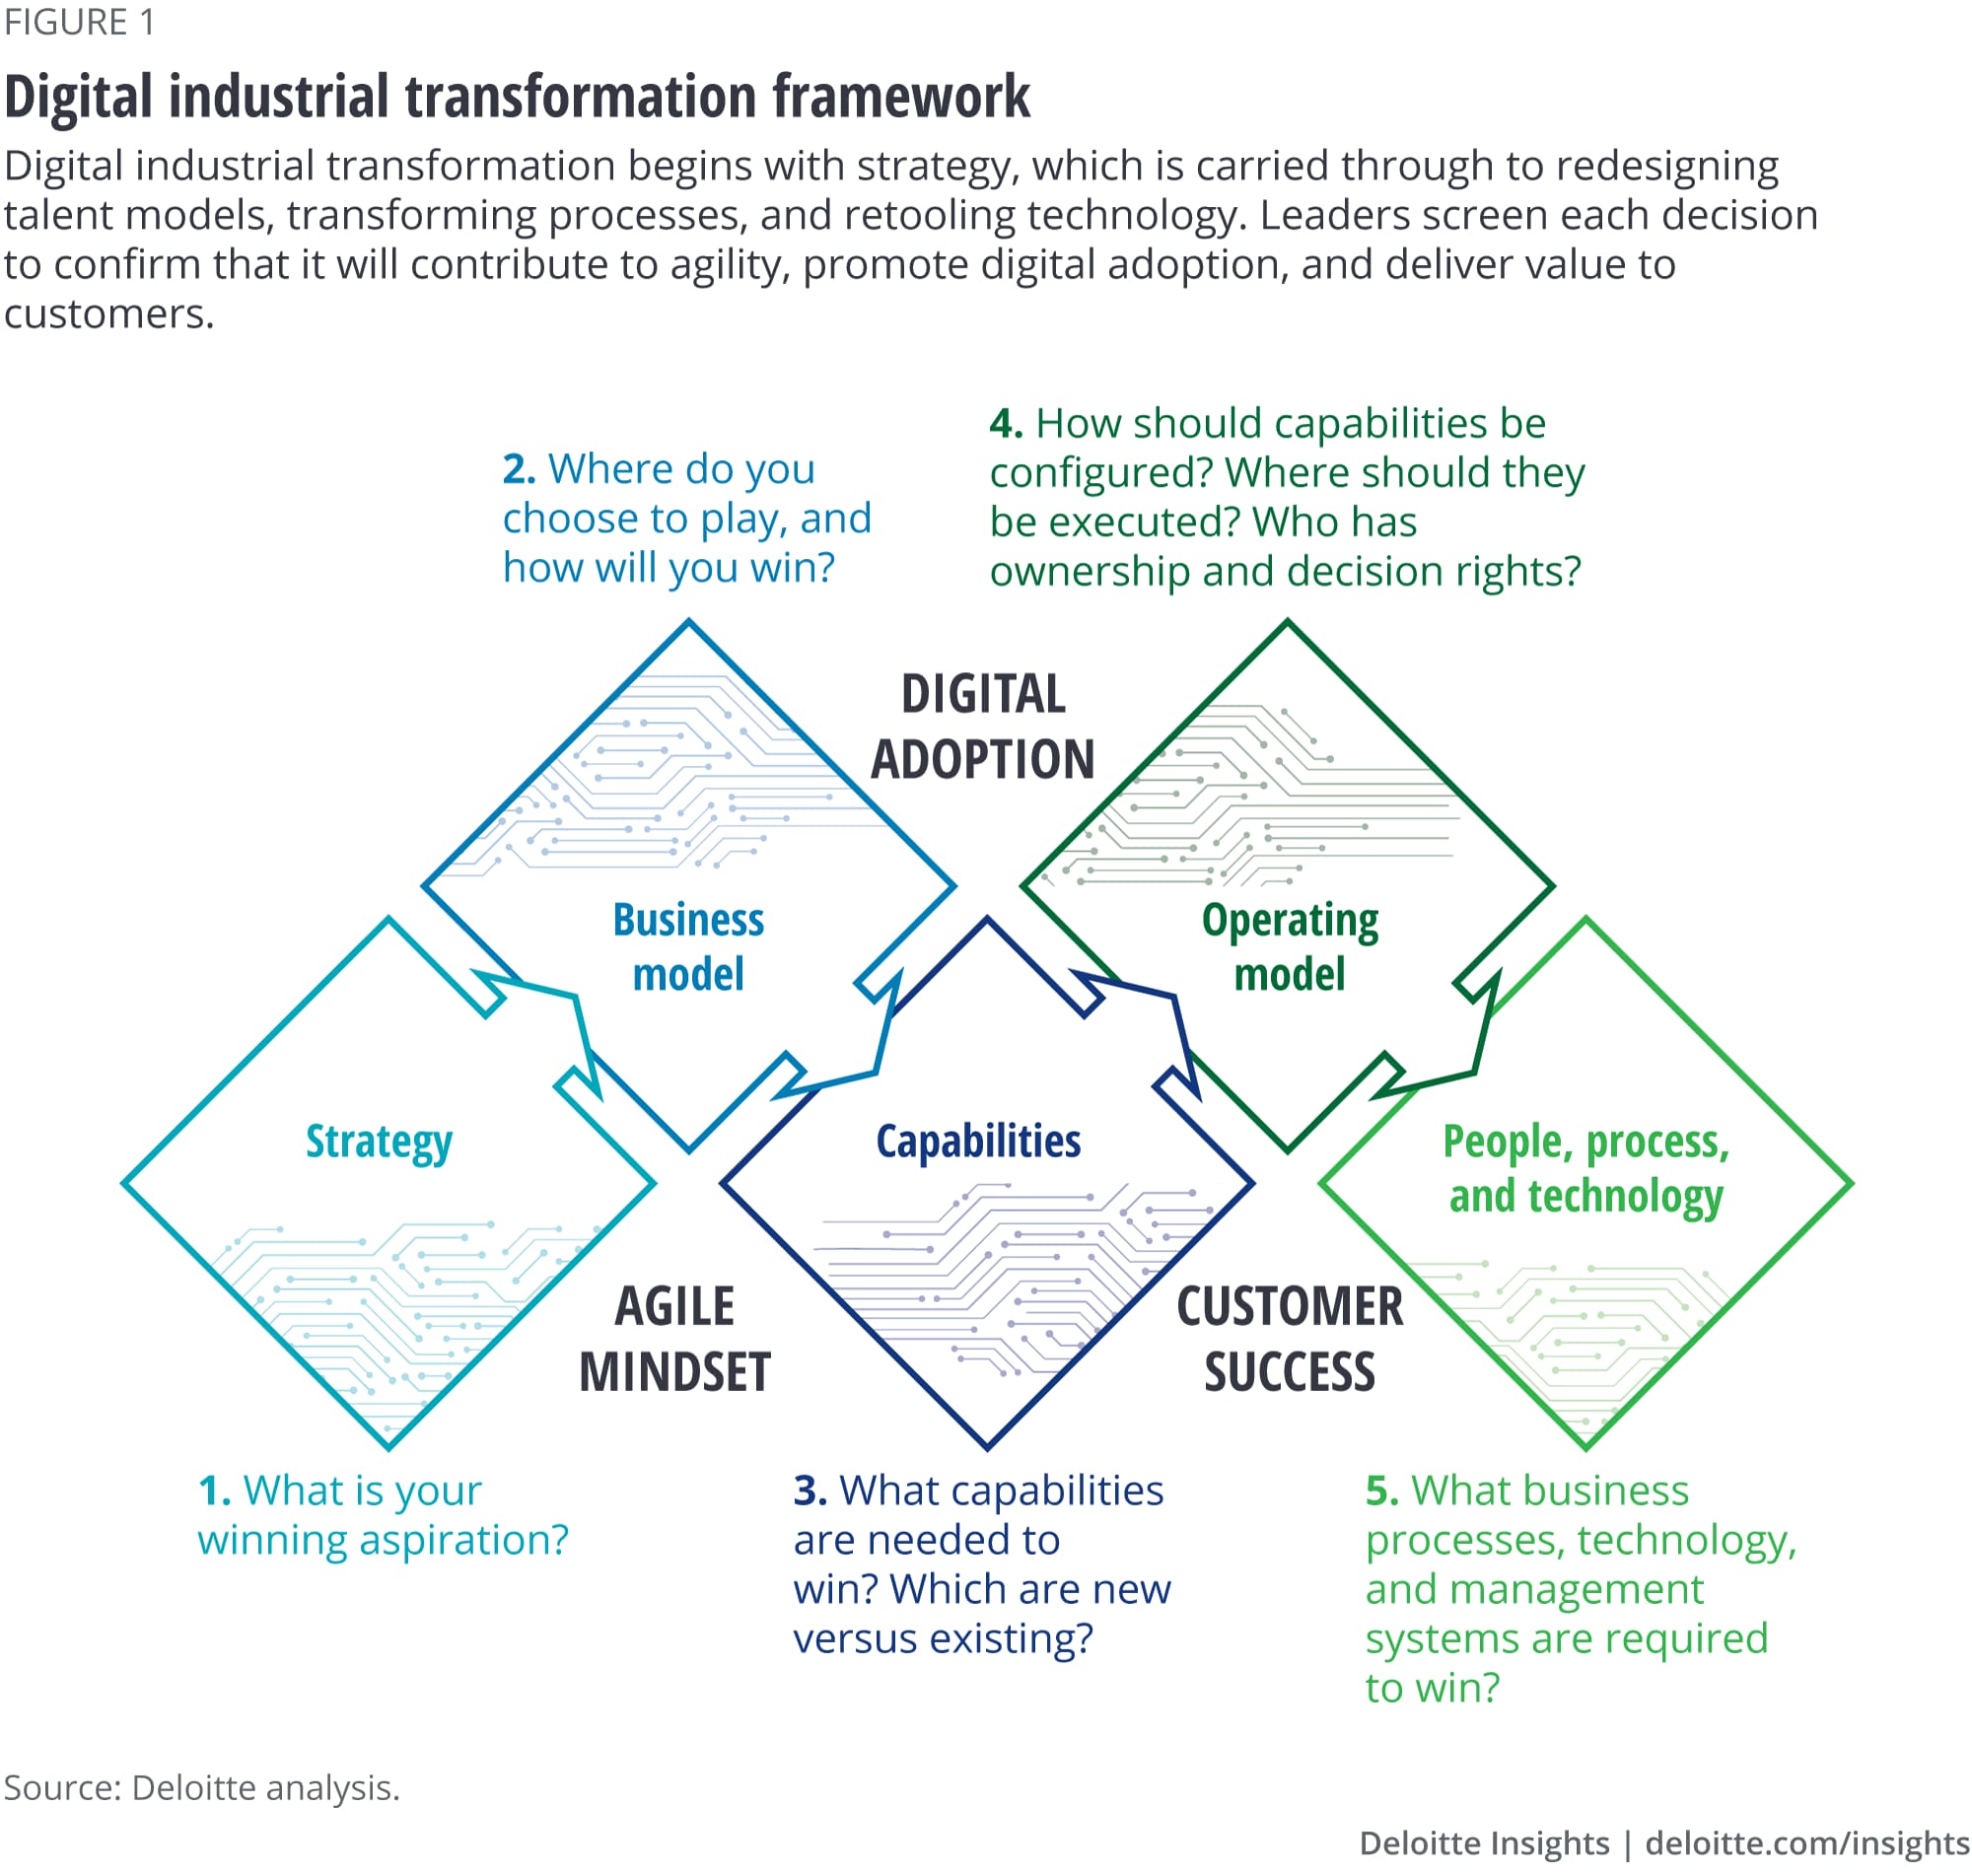 Digital industrial tranformation framework